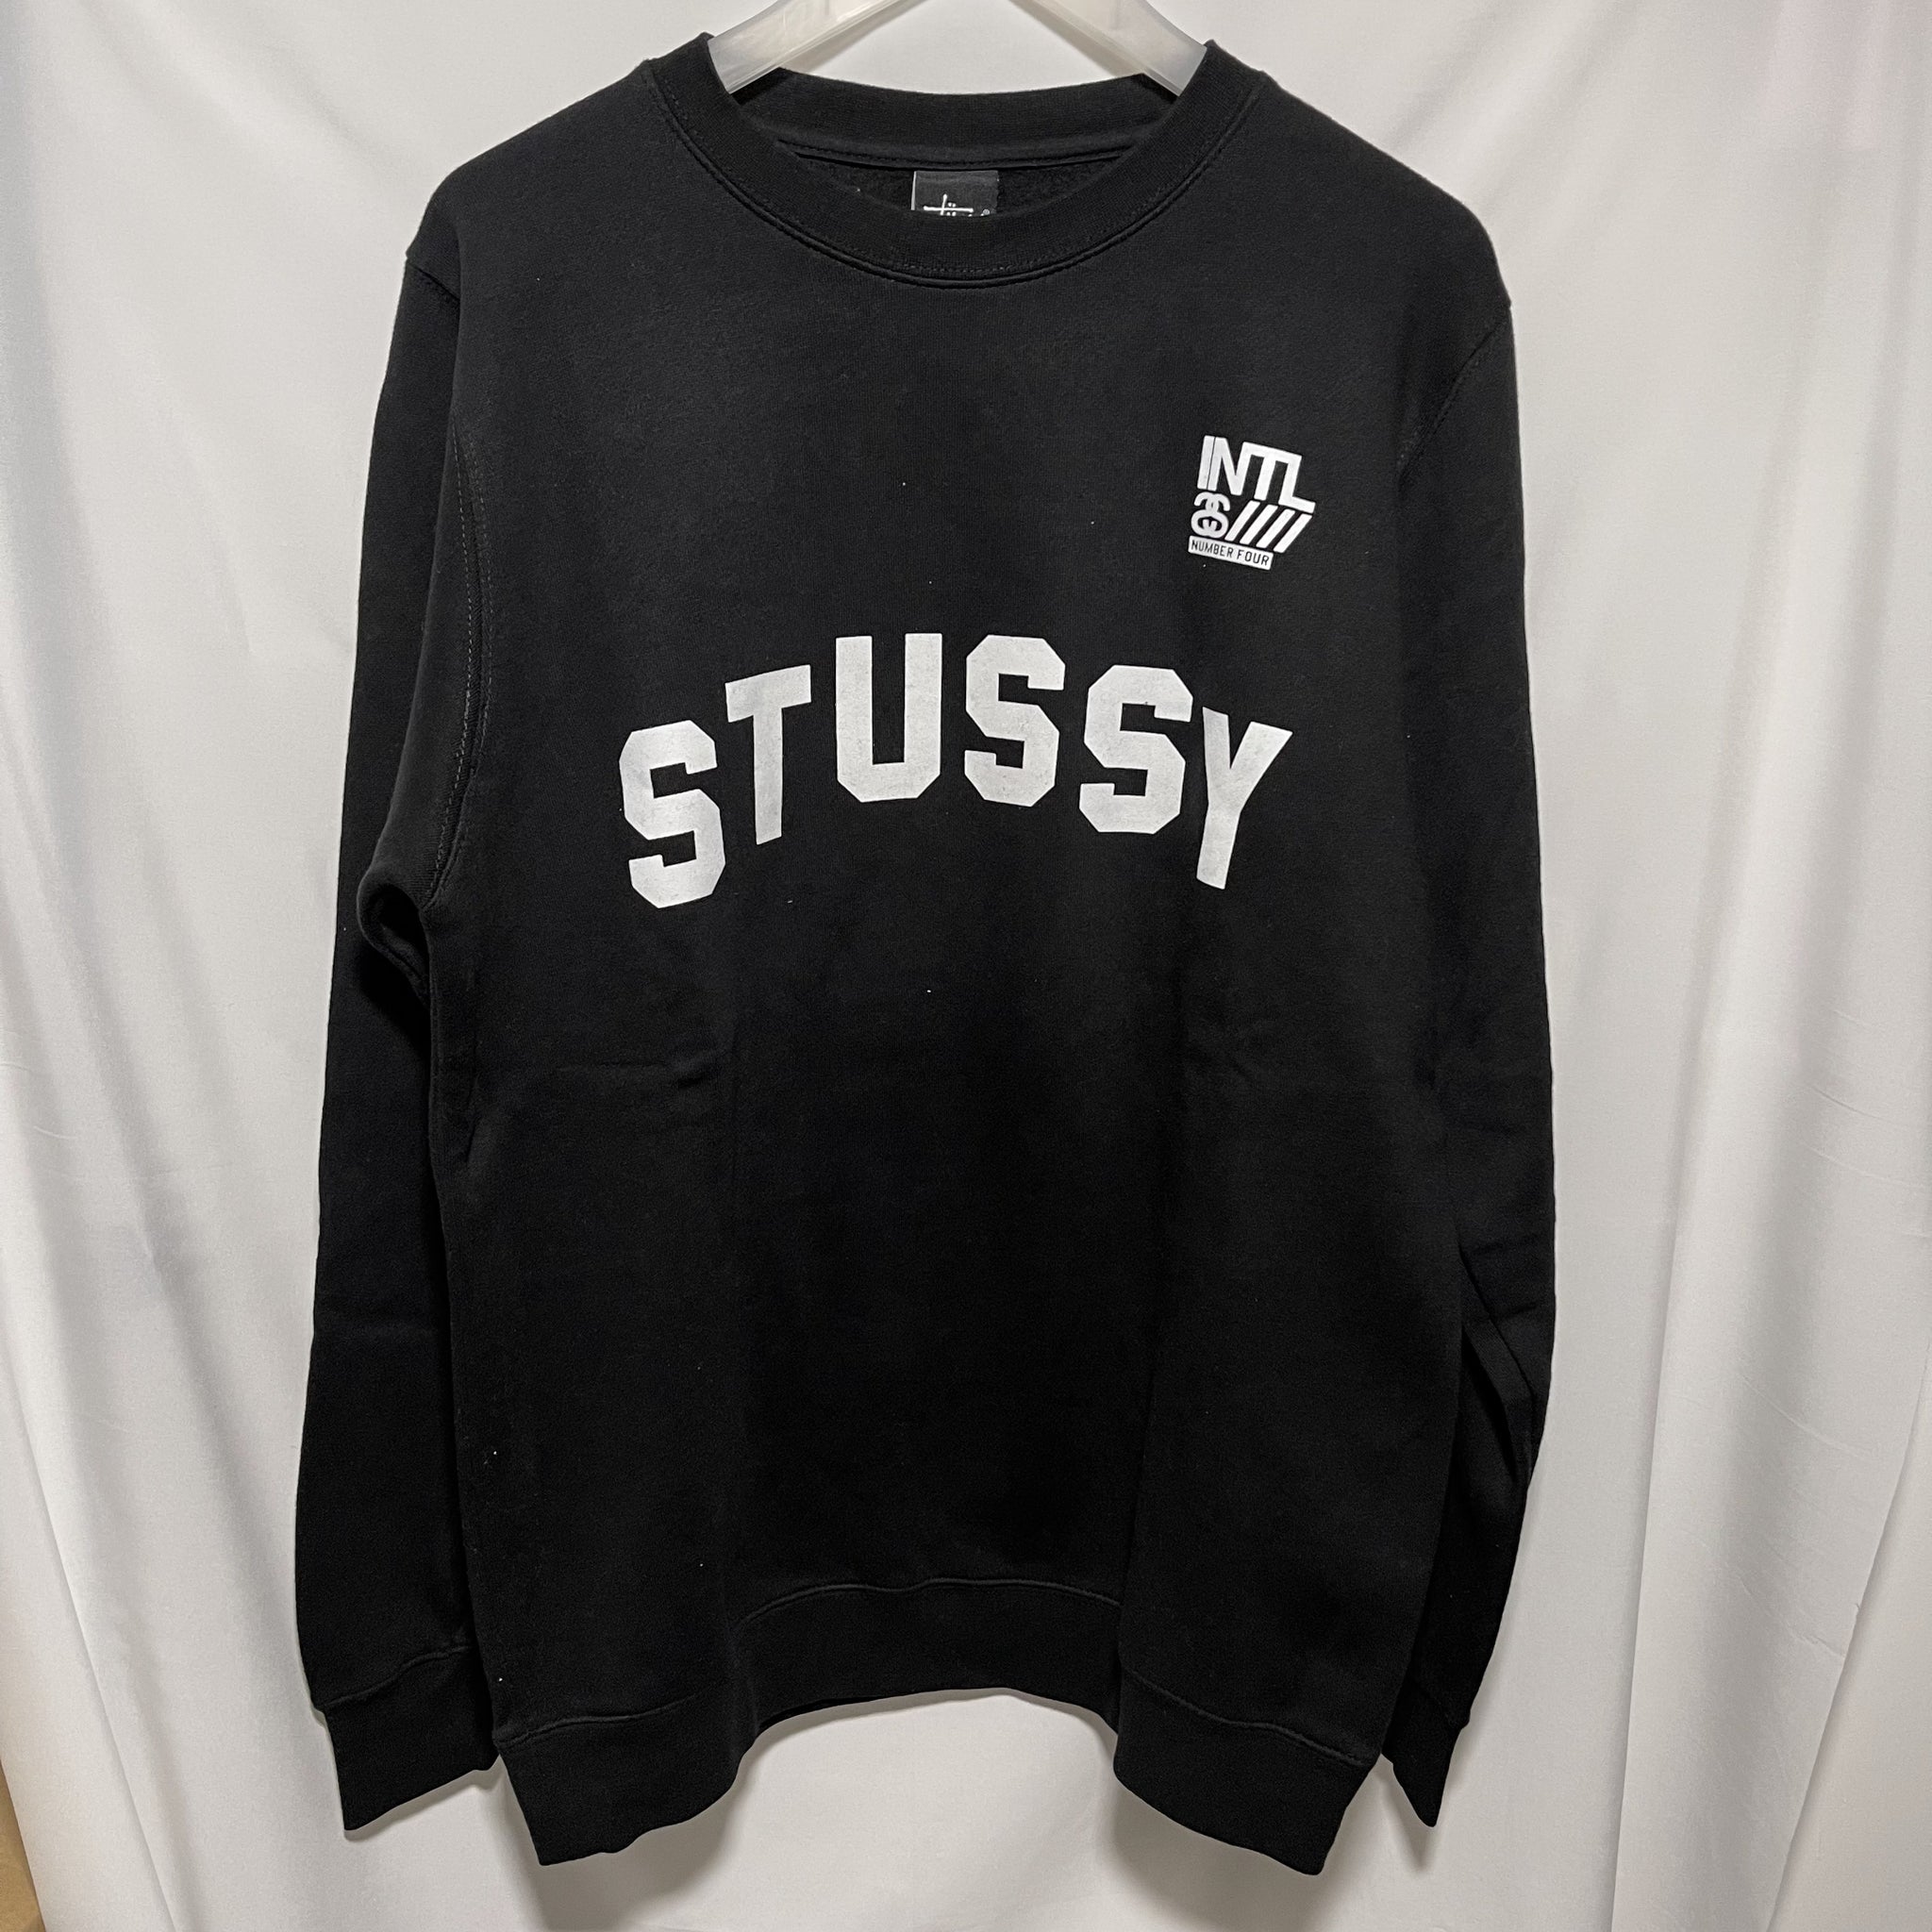 全新 stussy crewneck fleece sweatshirt size M black 黑色抓毛厚衛衣